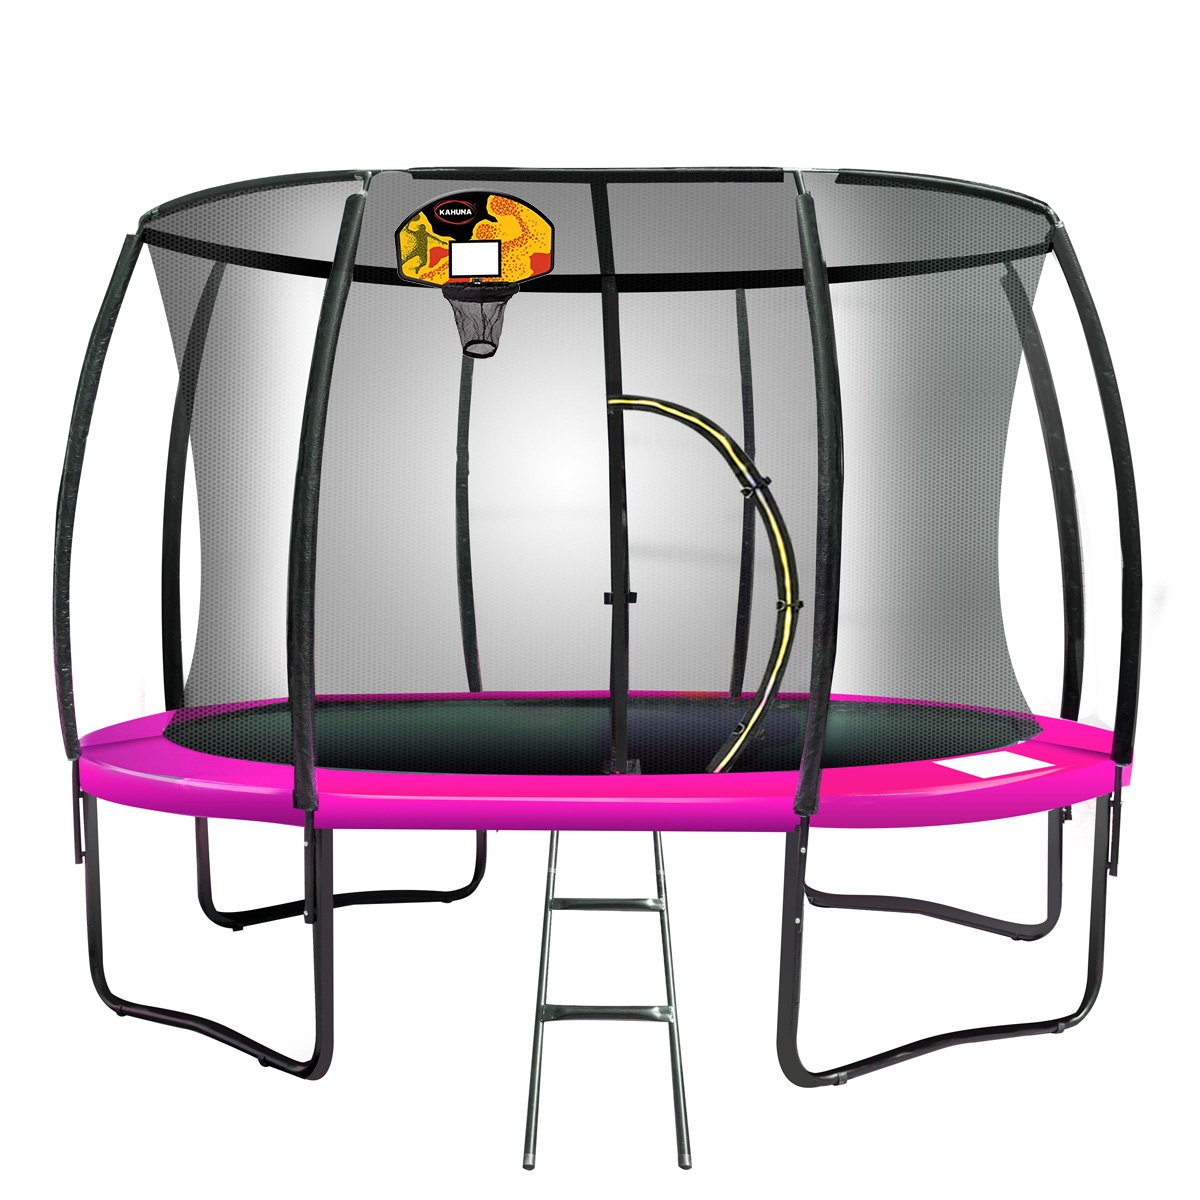 Kahuna 16ft Outdoor Trampoline Kids Children With Safety Enclosure Pad Mat Ladder Basketball Hoop Set - Pink